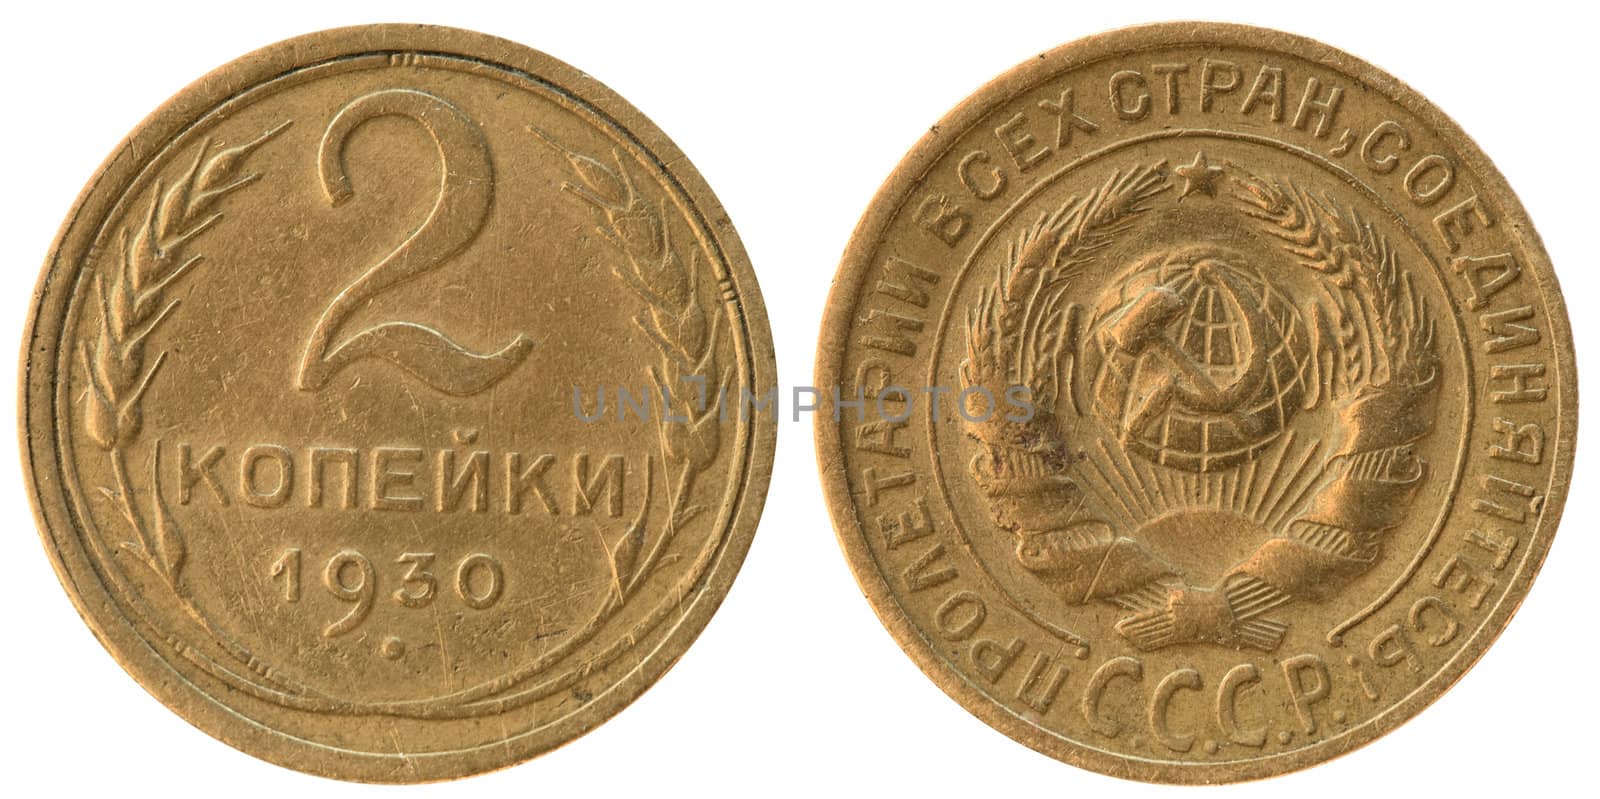 The Soviet Union coin two copecks on white